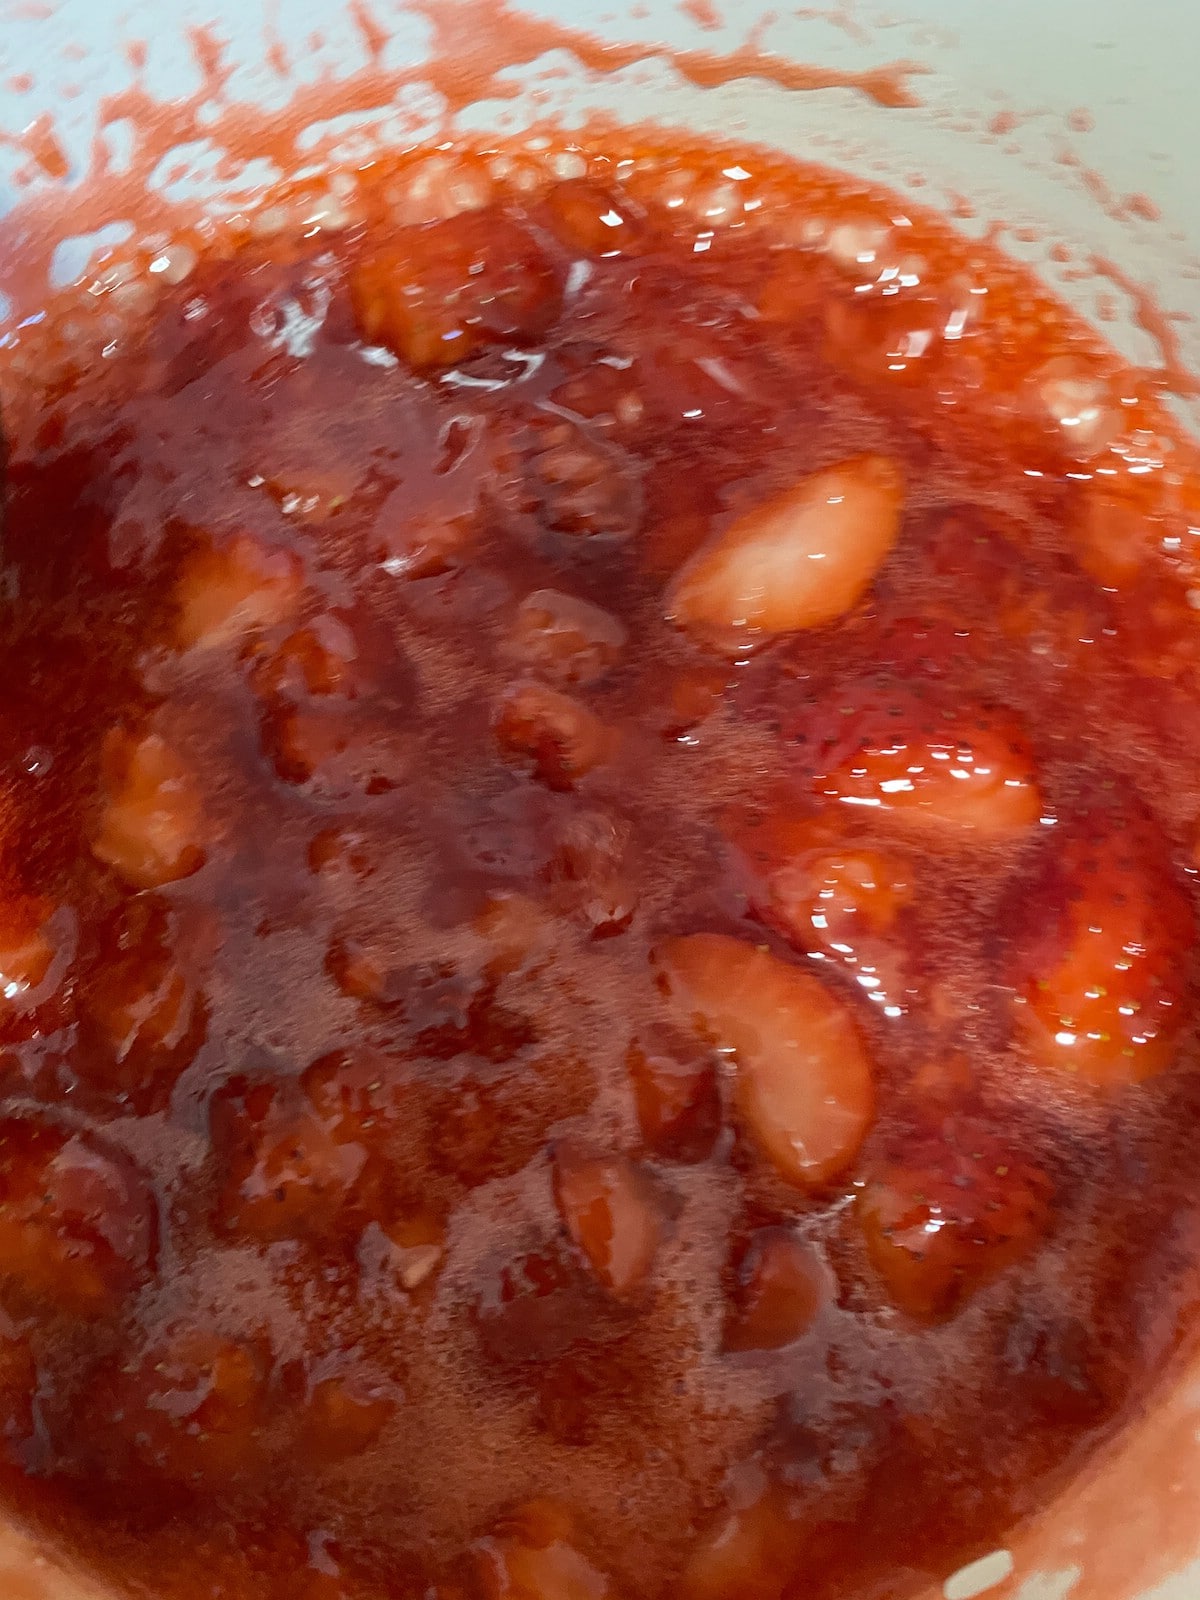 Strawberry jam mixture in stockpot